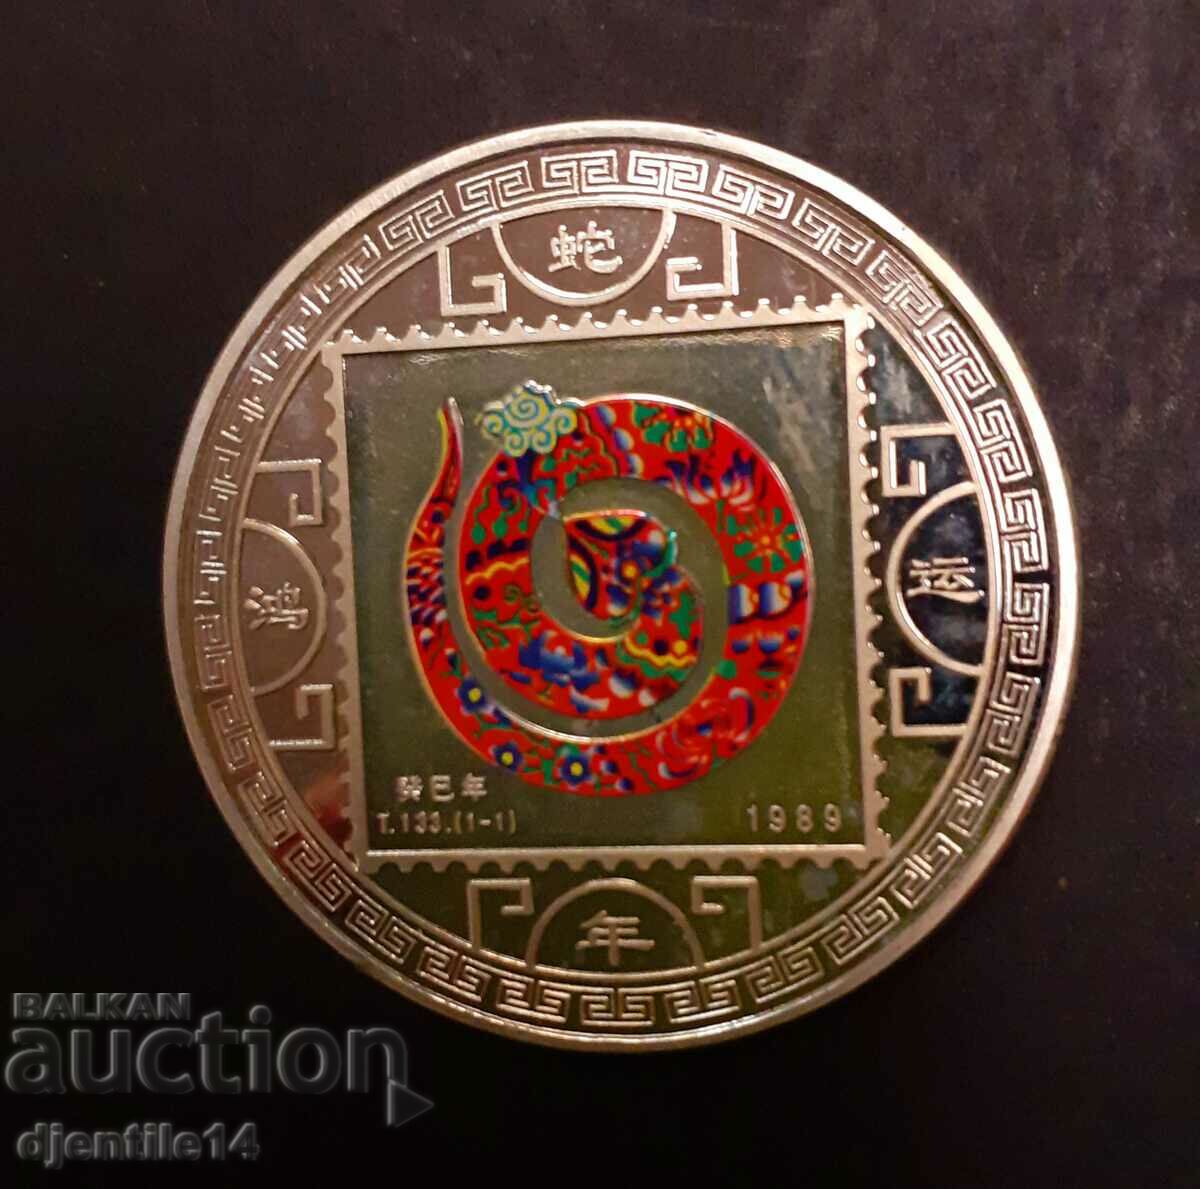 Japan zodiac medal